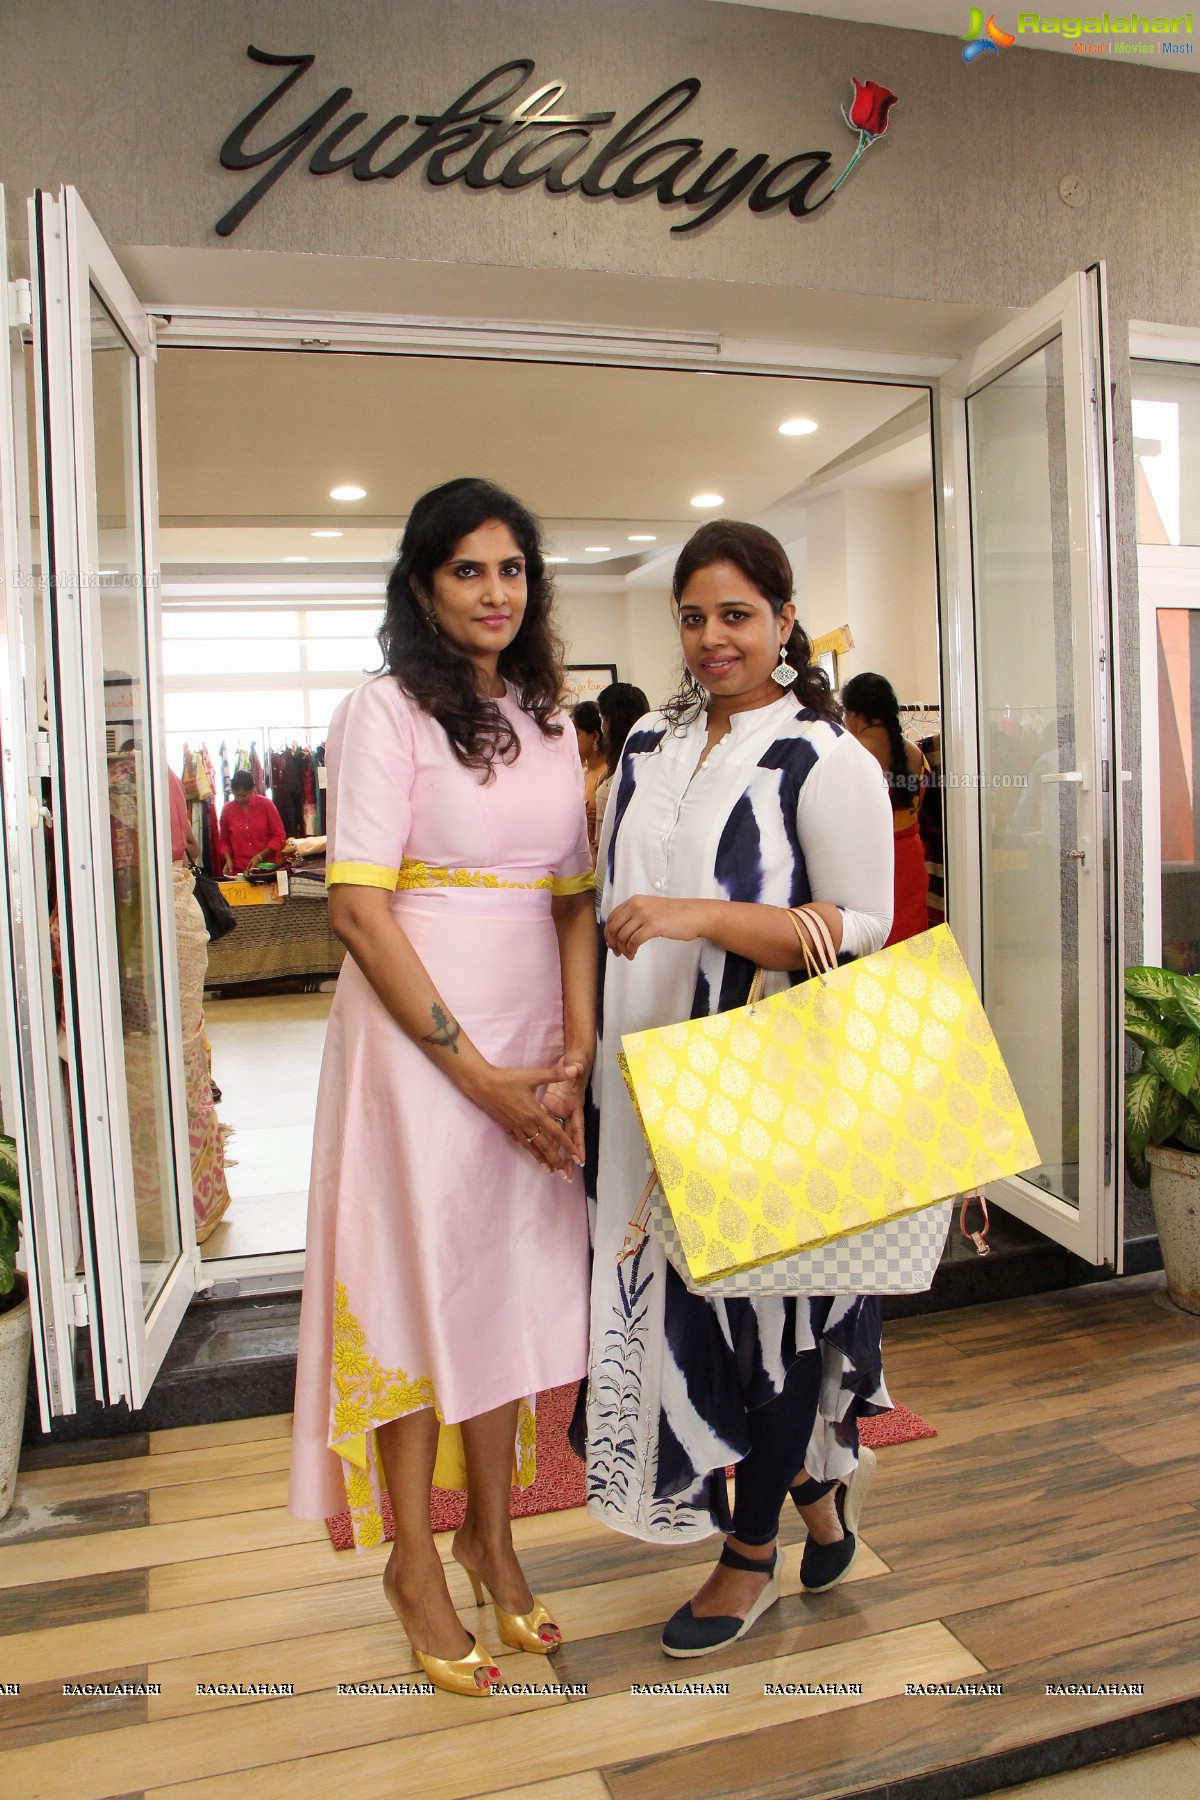 Vastraabharanam - A Monday Full of Shopping with 12 Designers at Yuktalaya, Madhapur